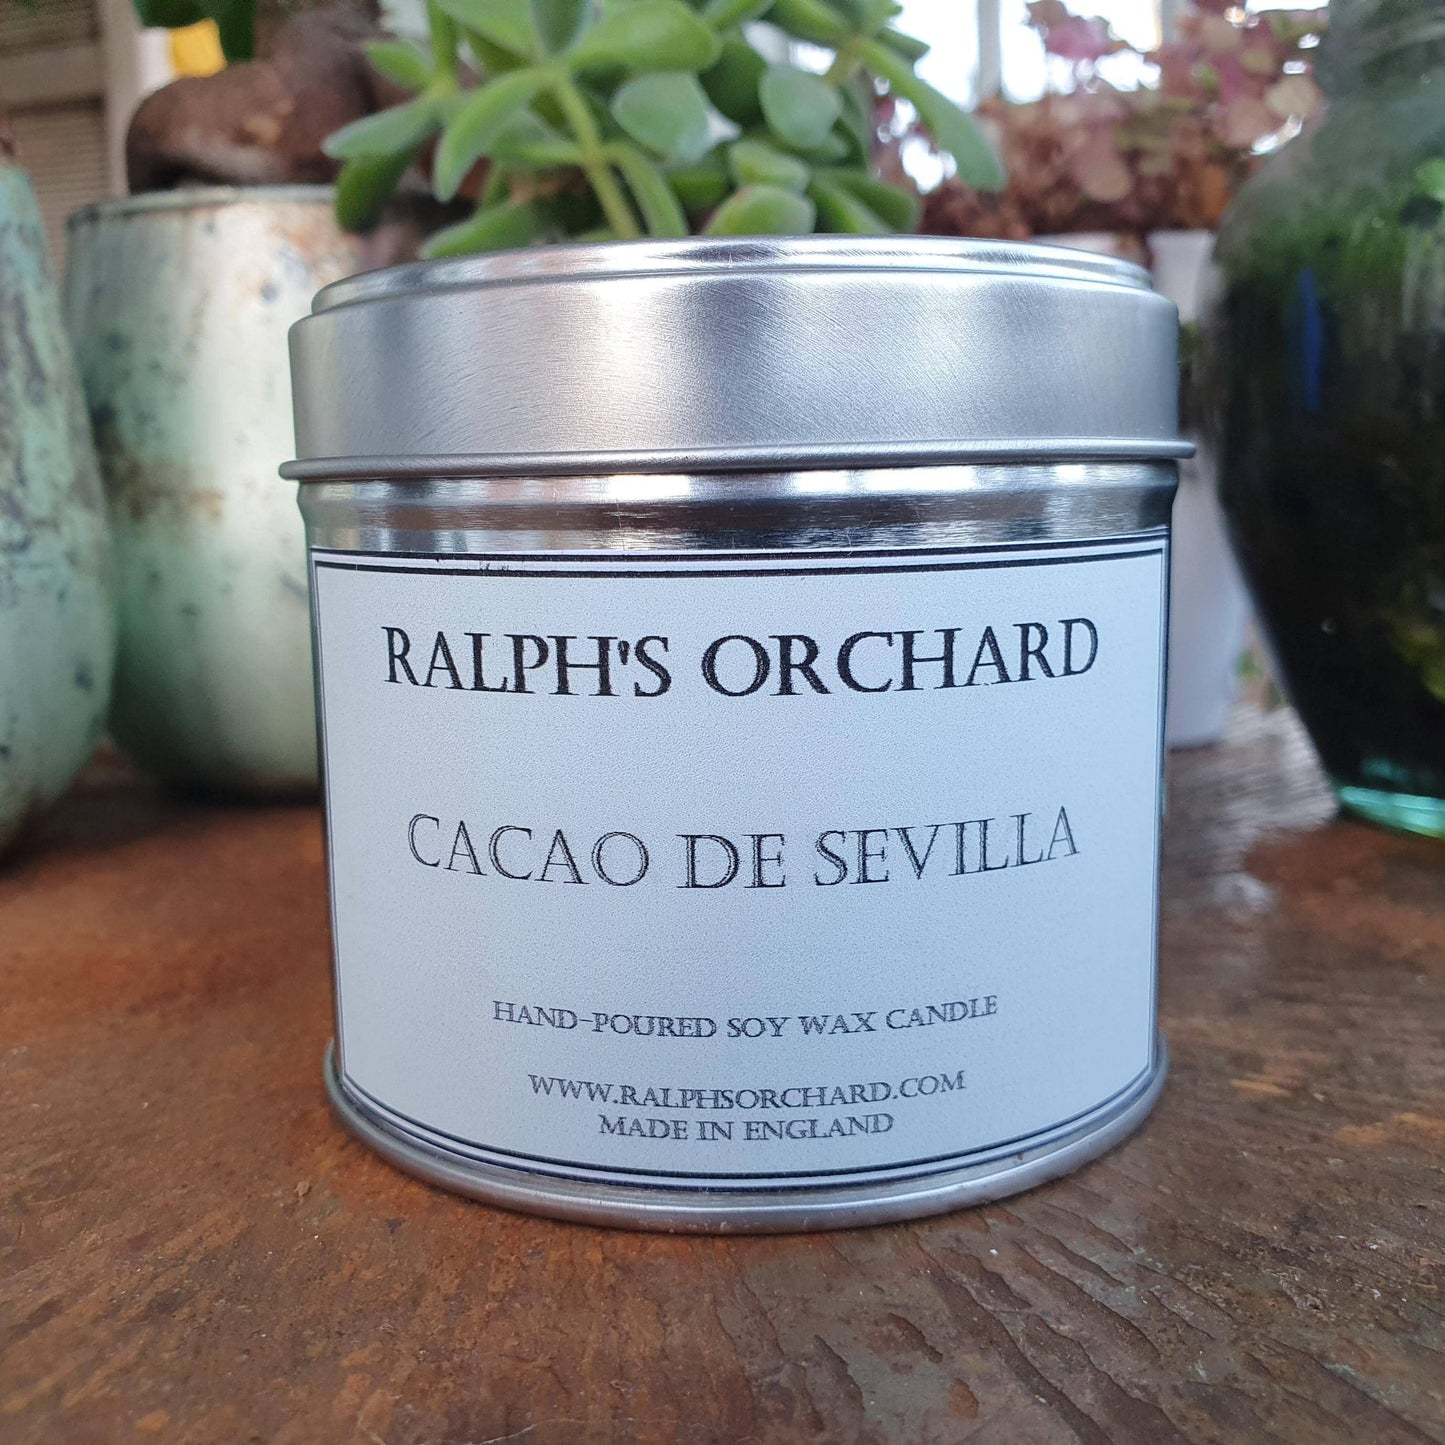 Cacao de Sevilla (Chocolate & Orange) candle